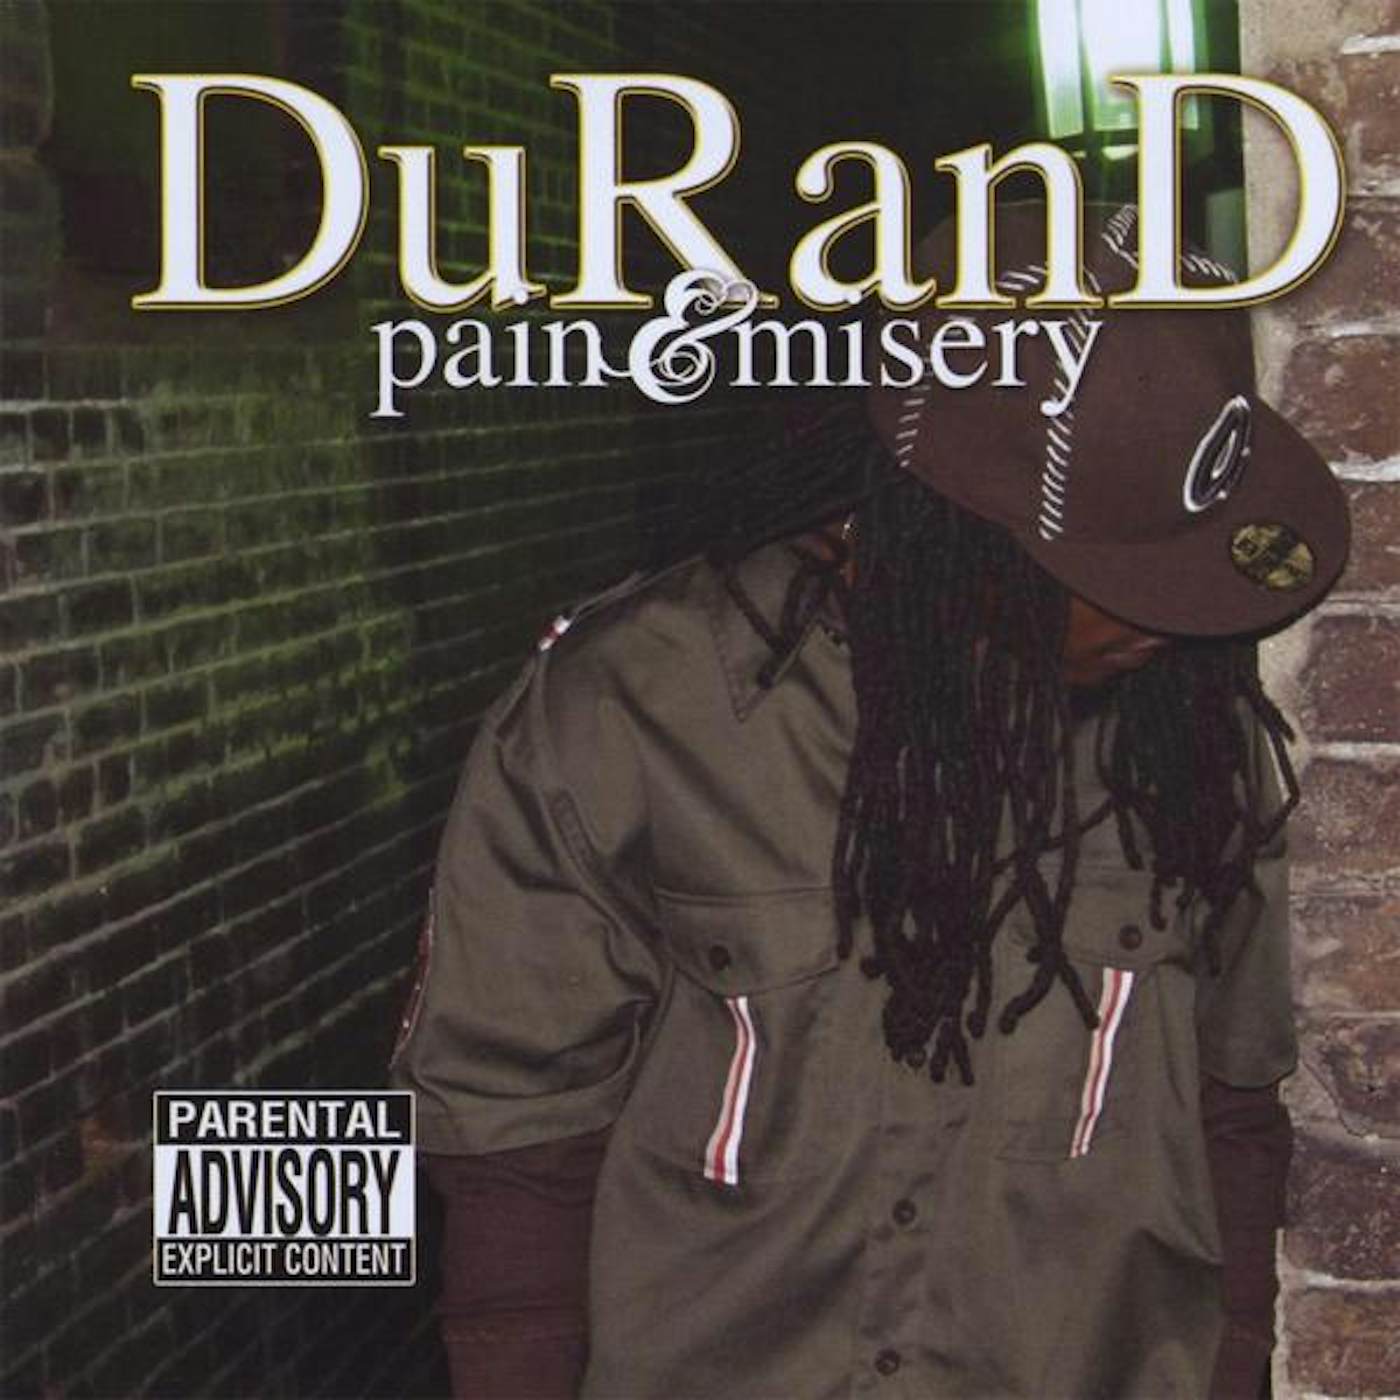 Durand PAIN & MISERY CD